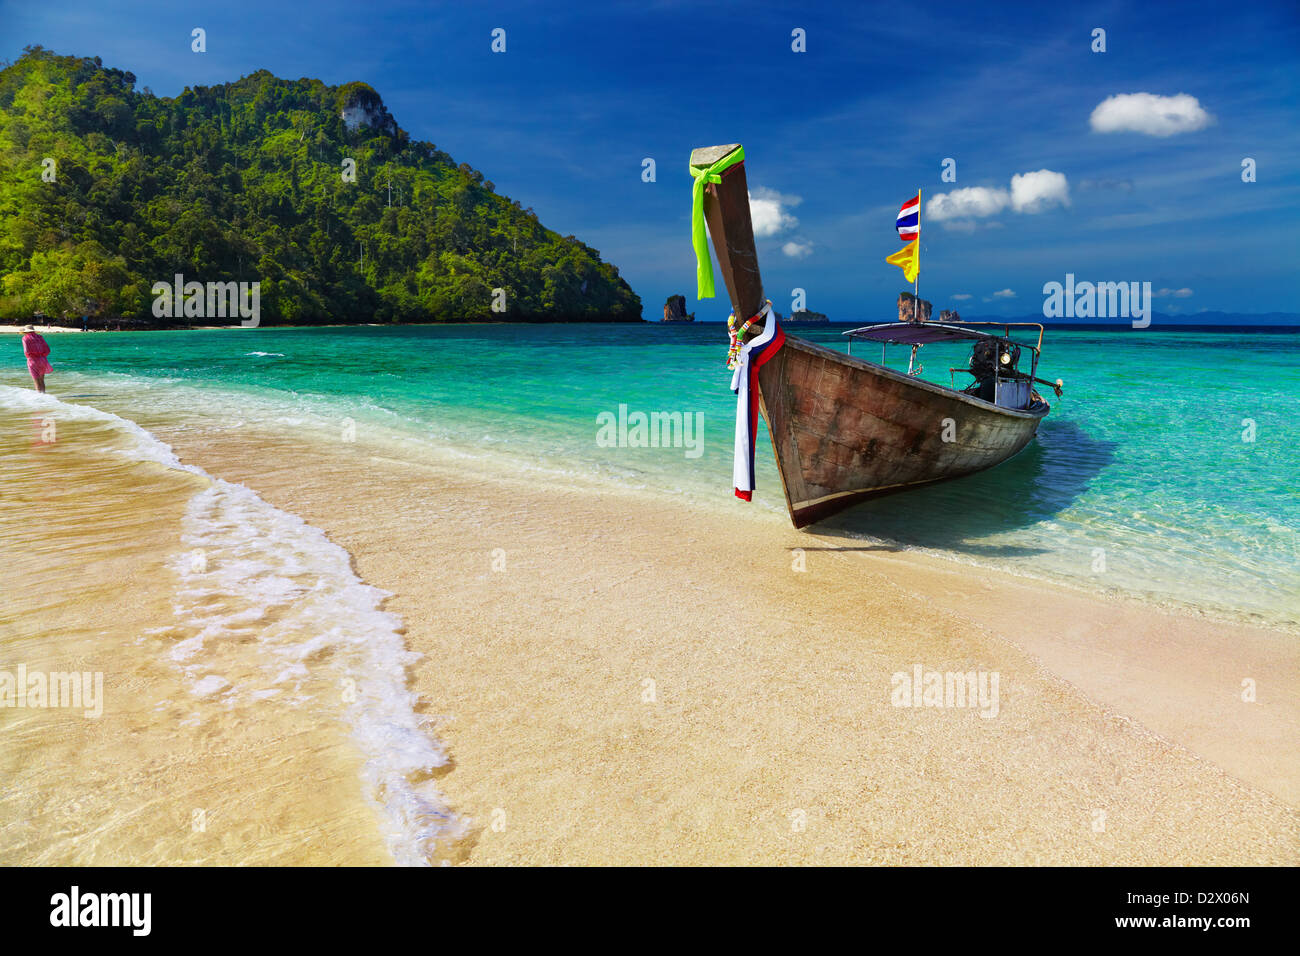 Longtail boat, spiaggia tropicale vasca, Isola, Mare delle Andamane, Thailandia Foto Stock